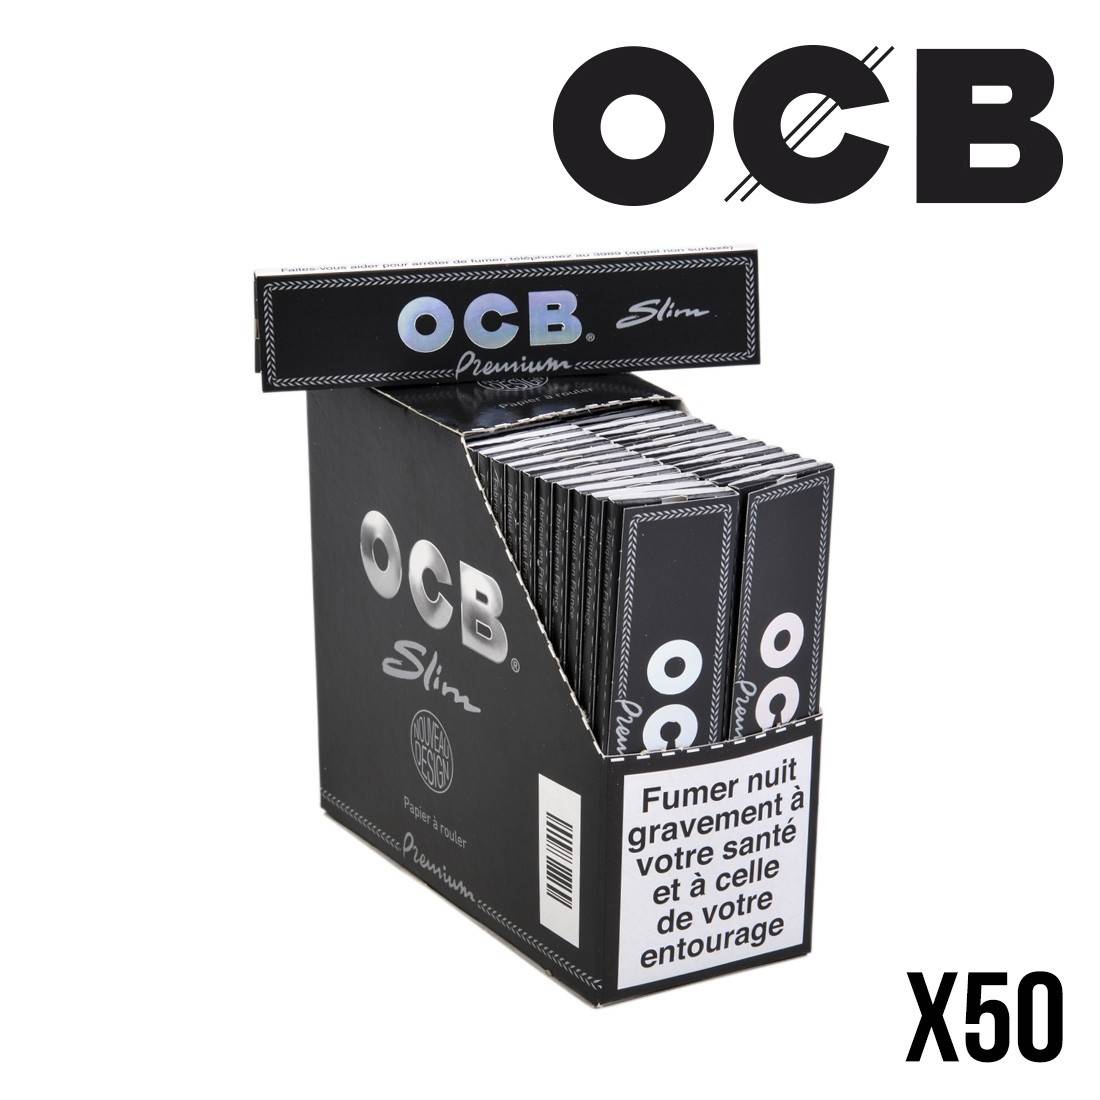 Carton de feuille ocb slim composé de 50 paquet de 32 feuilles neuf scellé  d origine - Ocb